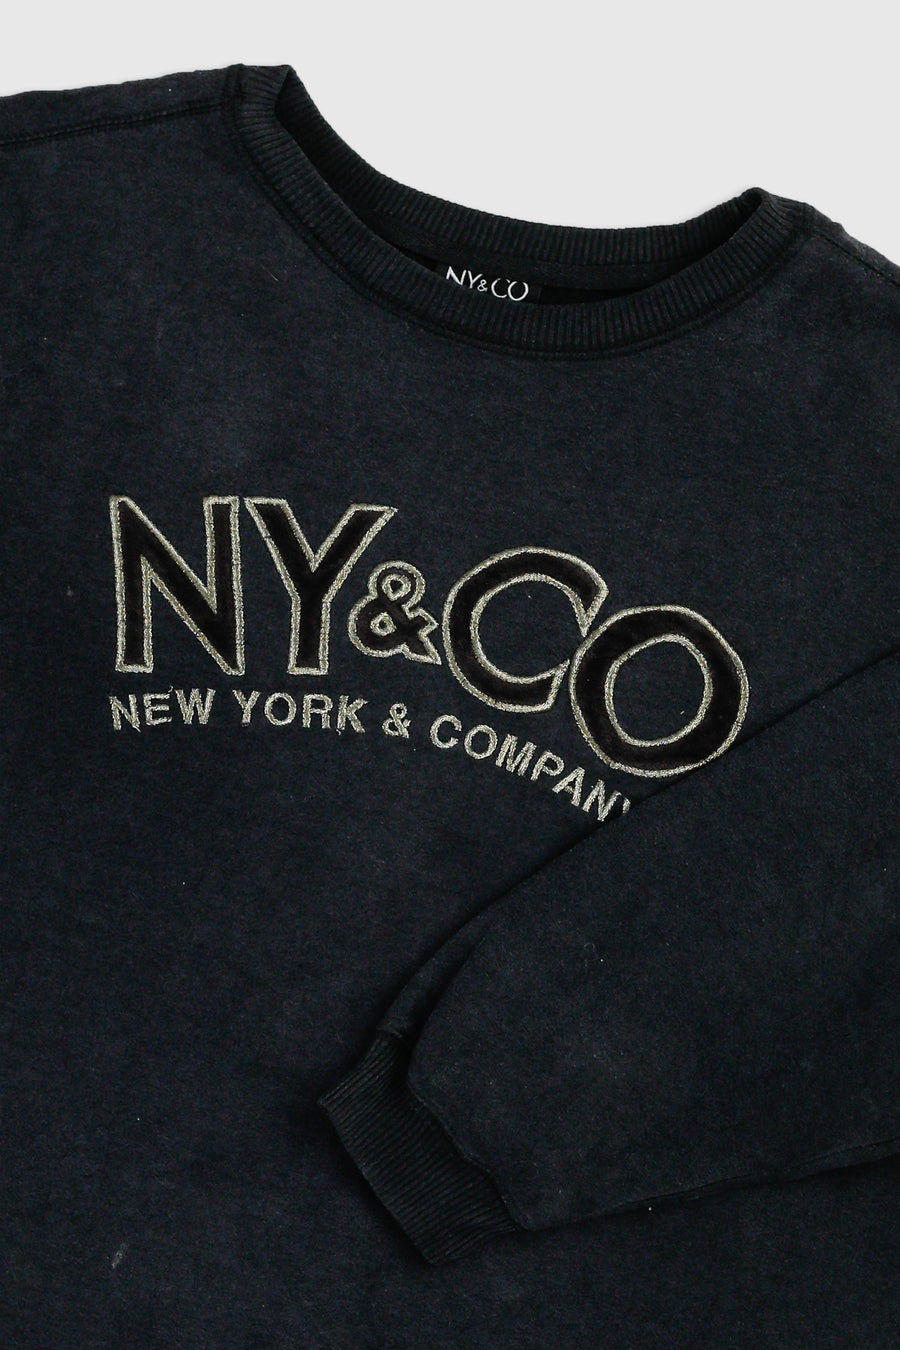 Vintage New York Sweatshirt - Women's M